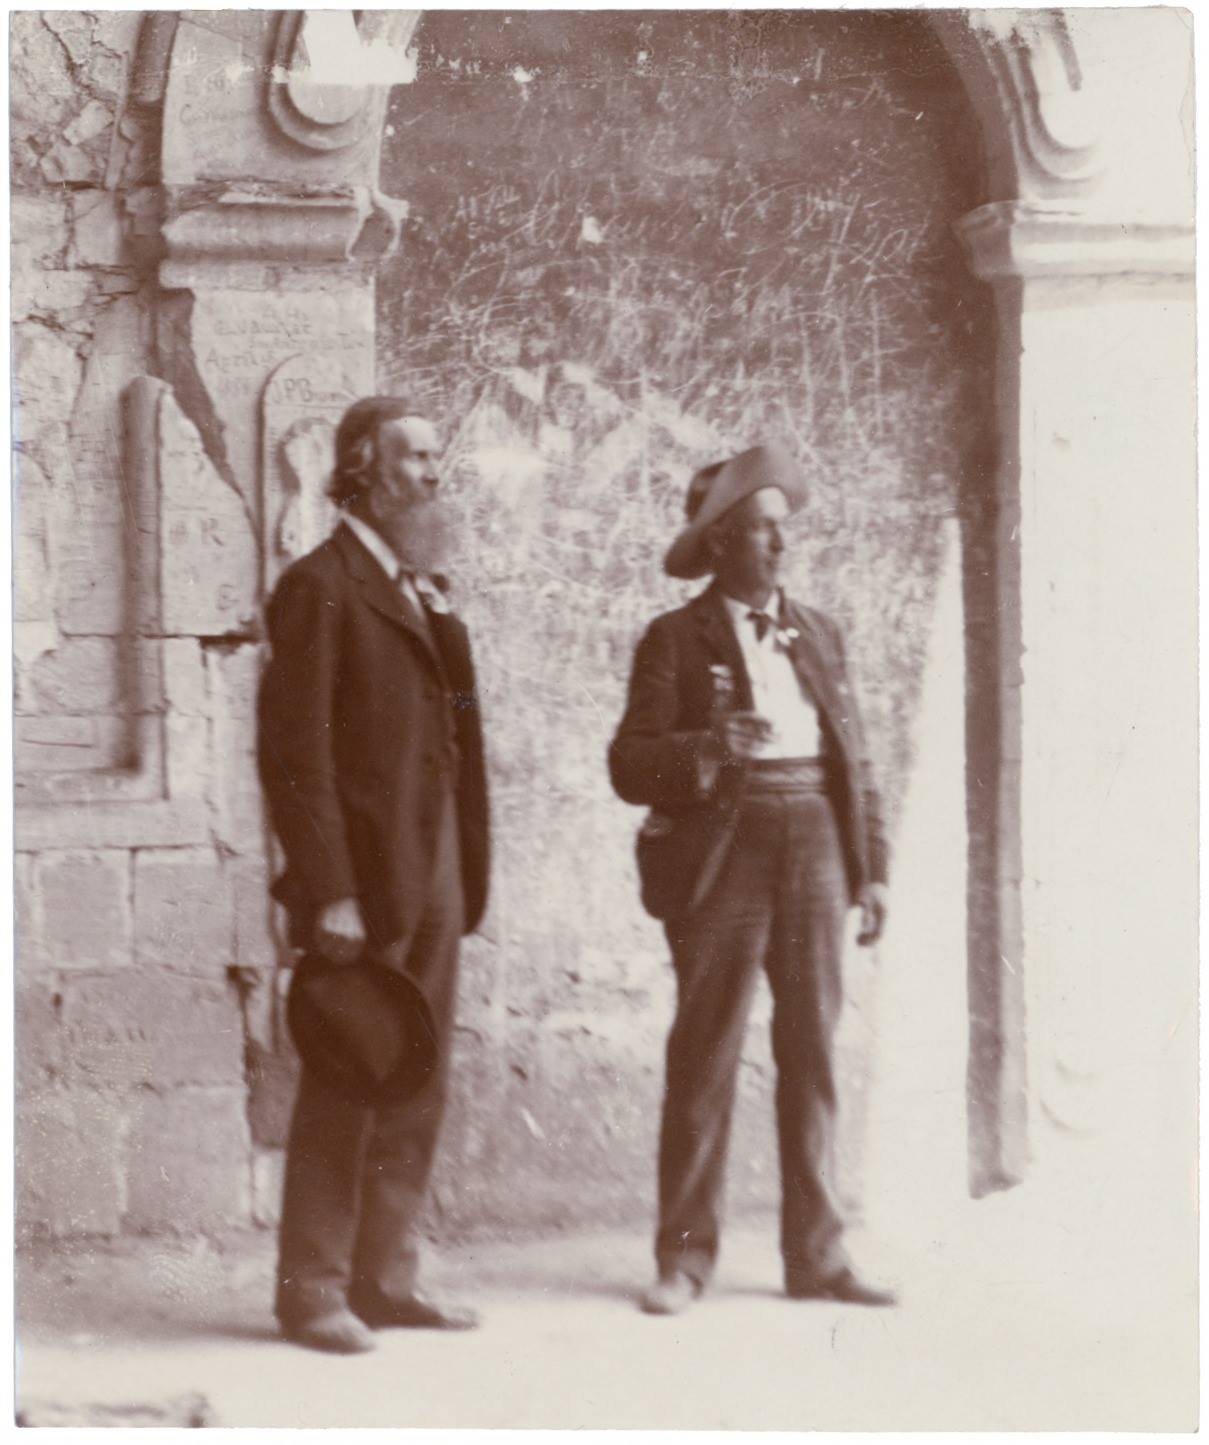 John Muir with Charles Lummis at Mission San Luis Rey, Oceanside, California, 1902